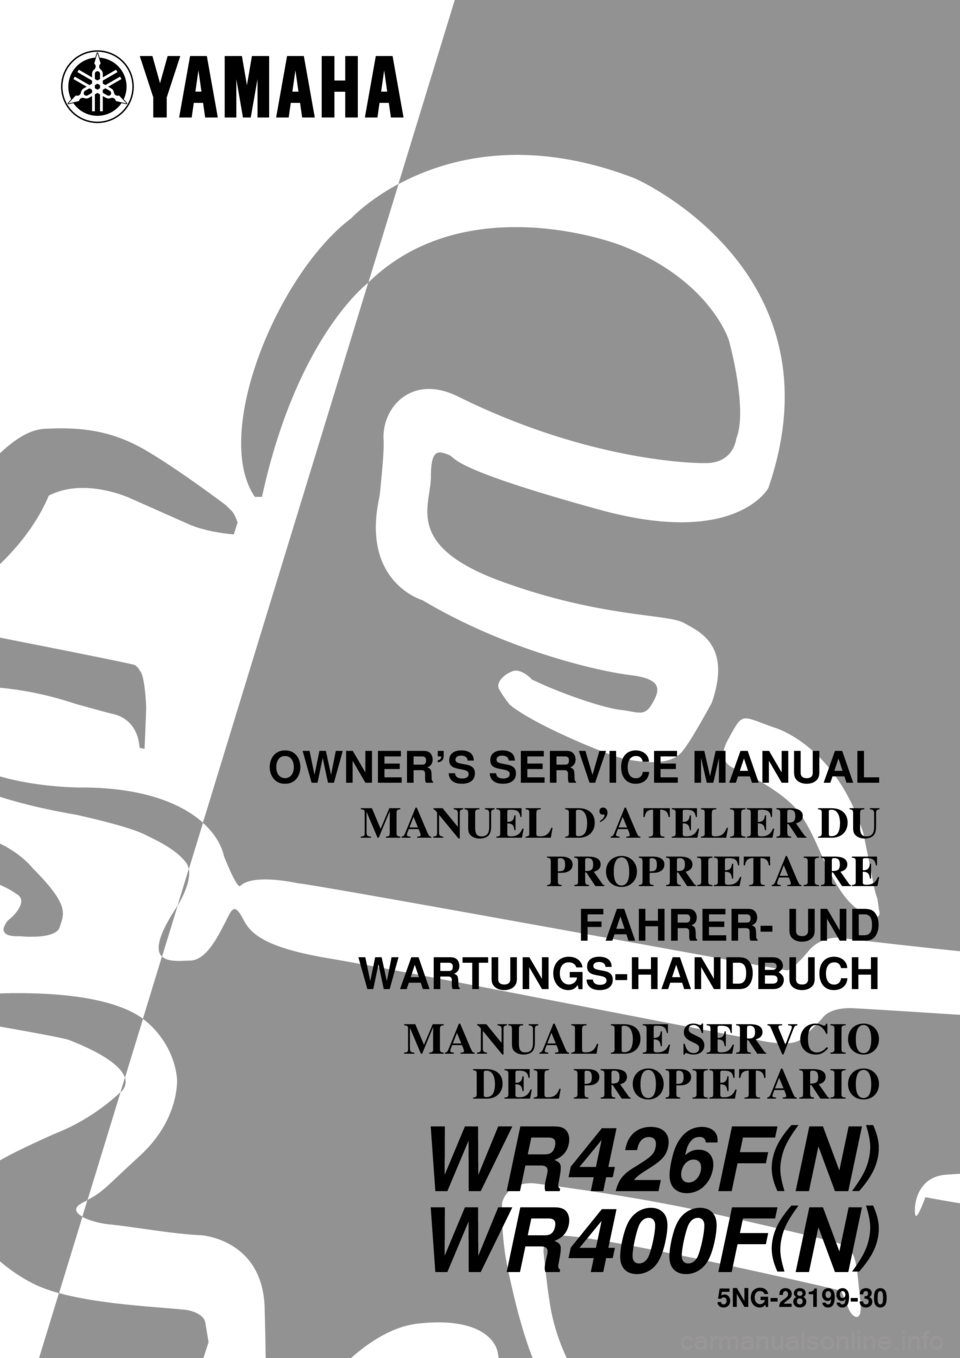 YAMAHA WR 400F 2001  Owners Manual      
 
 
 
5NG-28199-30
WR426F(N)
WR400F(N)
OWNER’S SERVICE MANUAL
MANUEL D’ATELIER DU
PROPRIETAIRE
FAHRER- UND
WARTUNGS-HANDBUCH
MANUAL DE SERVCIO
DEL PROPIETARIO 